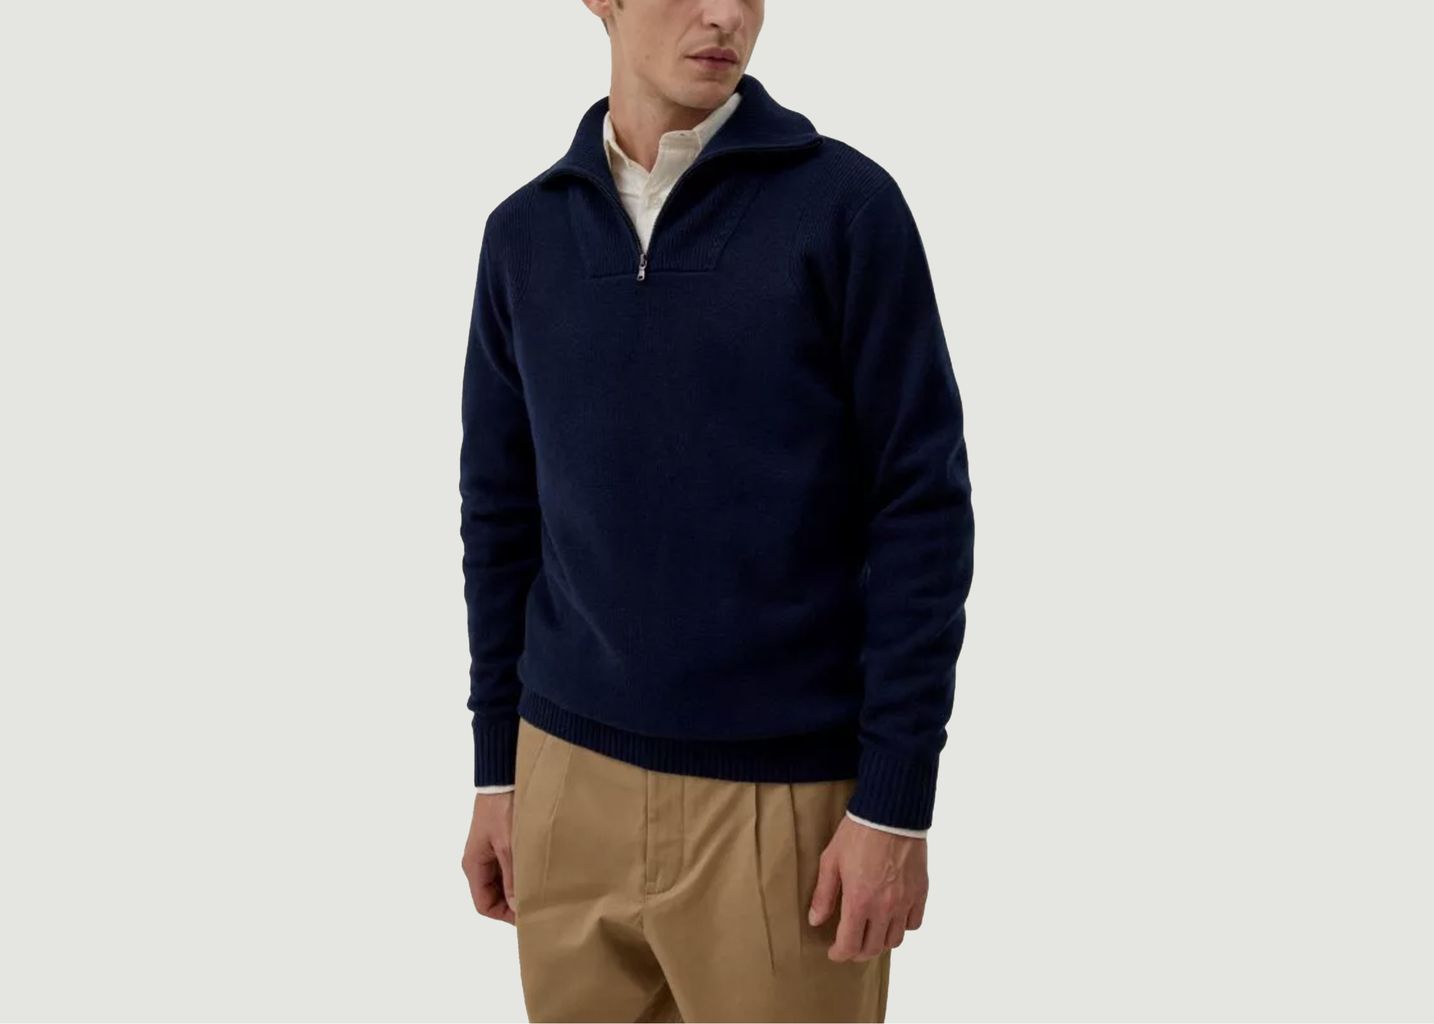 Norgal cashmere sweater - Hircus